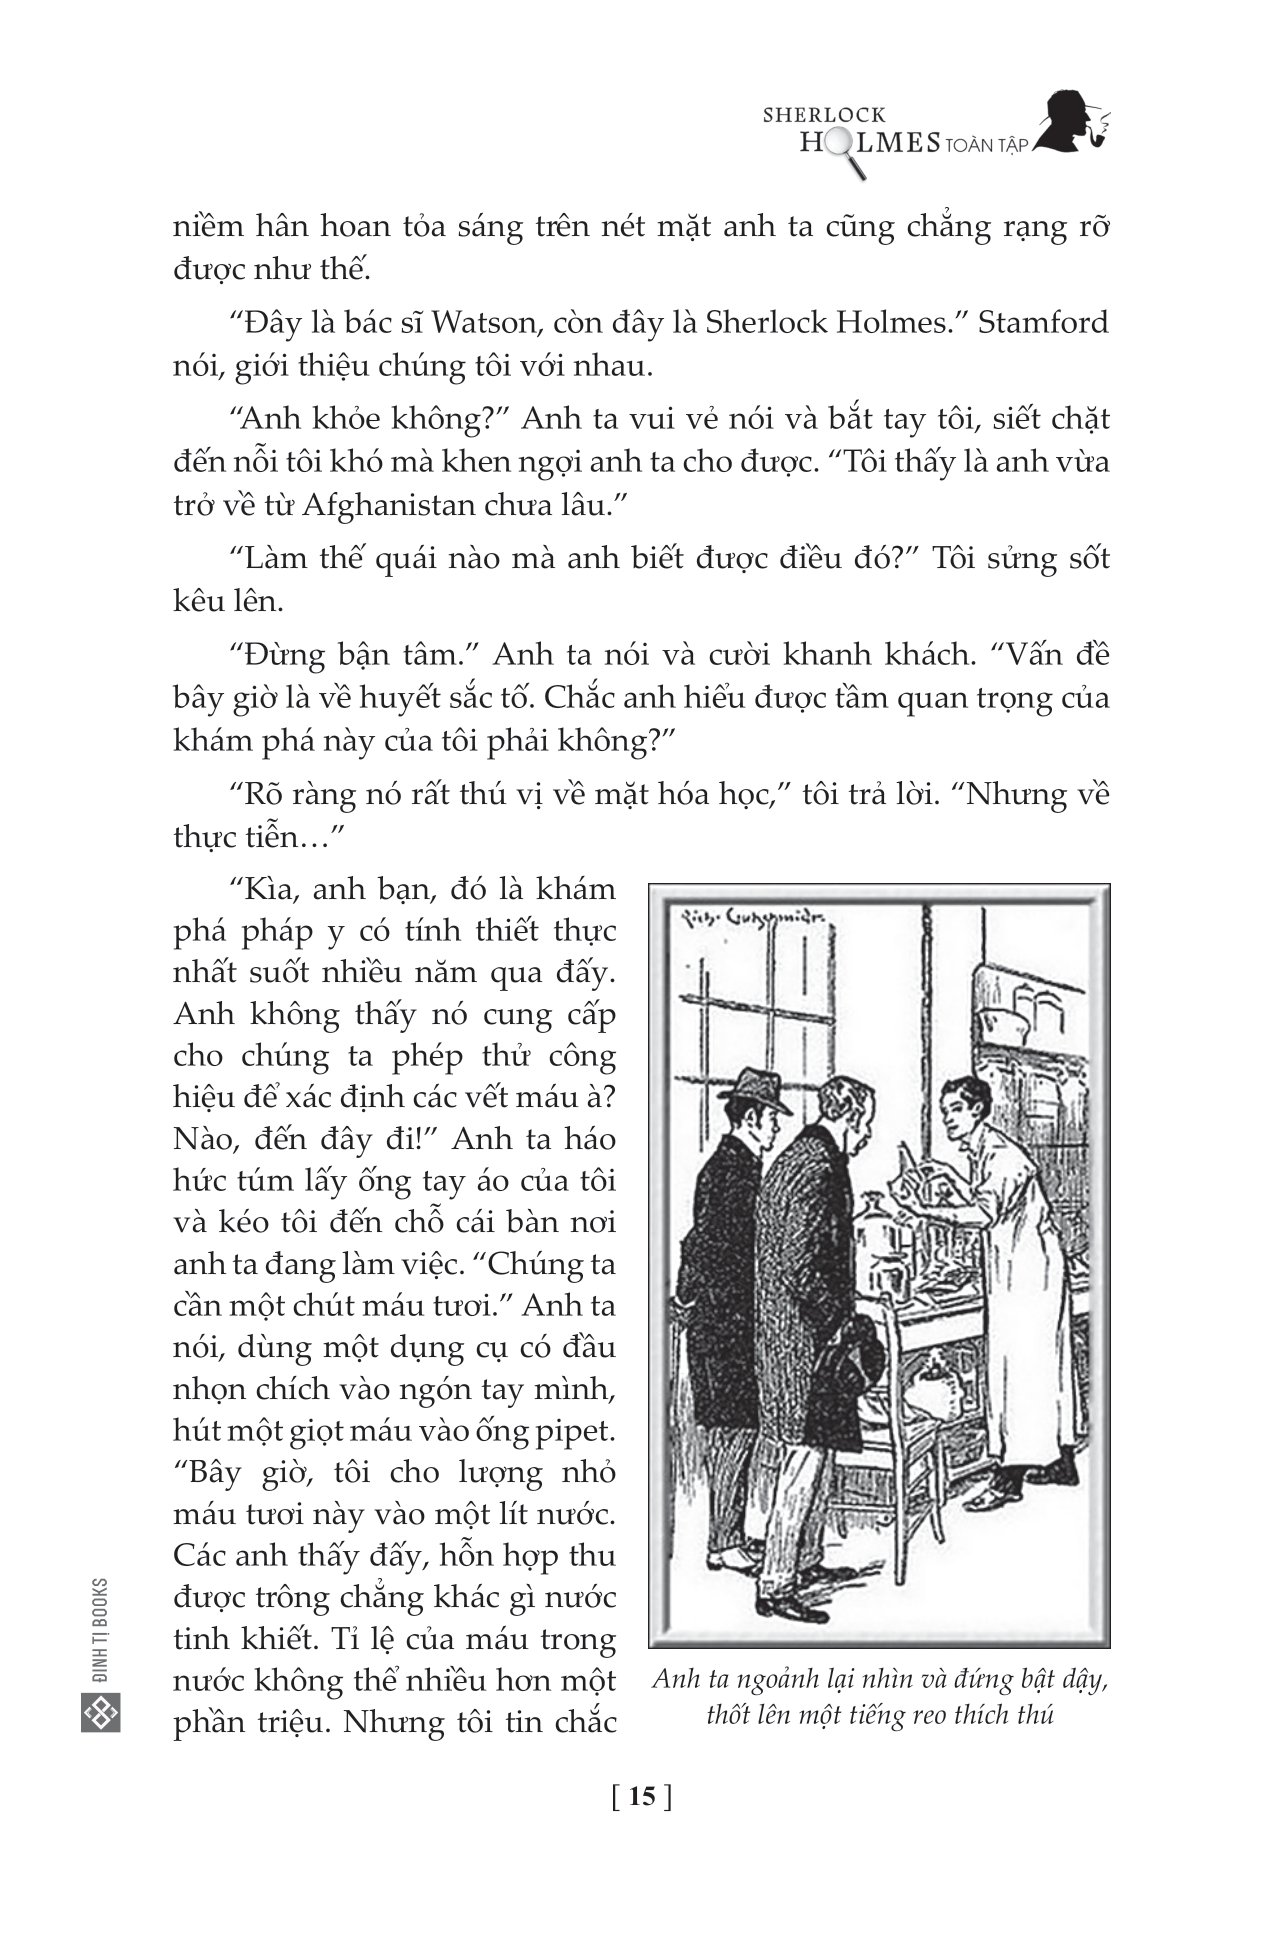 Sherlock Holmes Toàn Tập - Tập 1 PDF